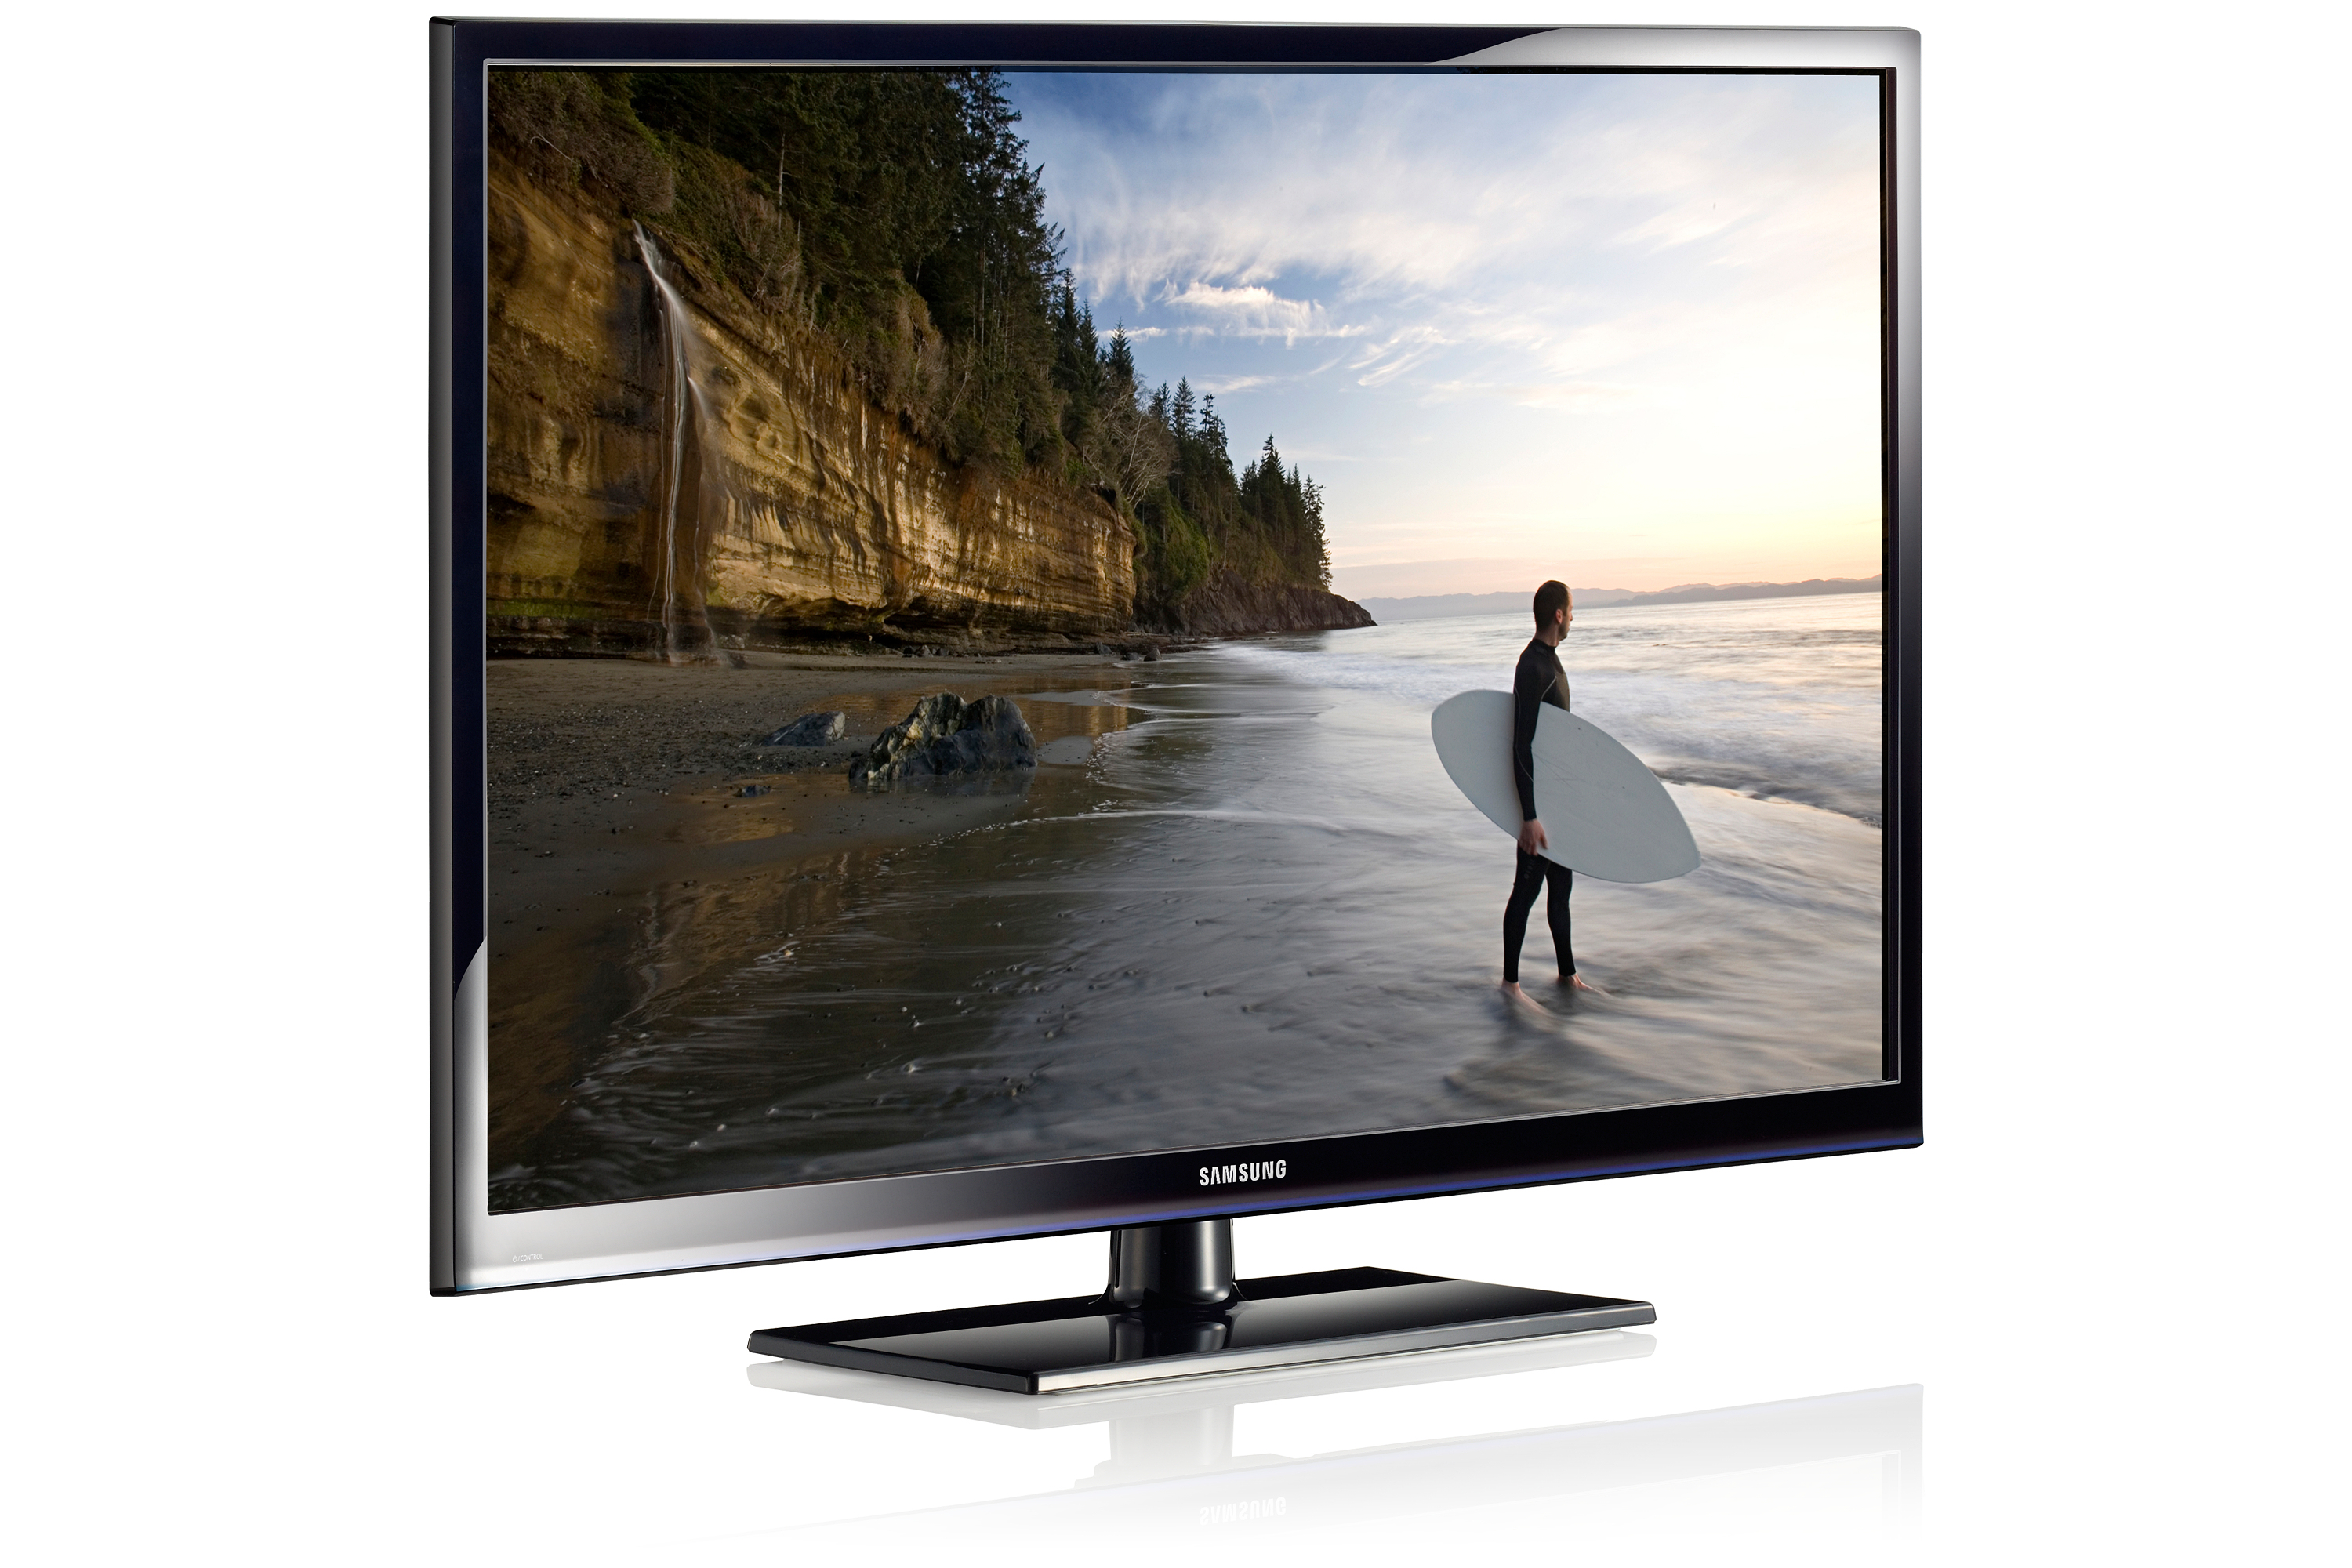 Телевизоры samsung 3. Samsung Smart TV 40. Телевизор самсунг 42 дюйма смарт. Samsung телевизор 2012 Smart TV. Телевизор самсунг 46 led смарт ТВ.